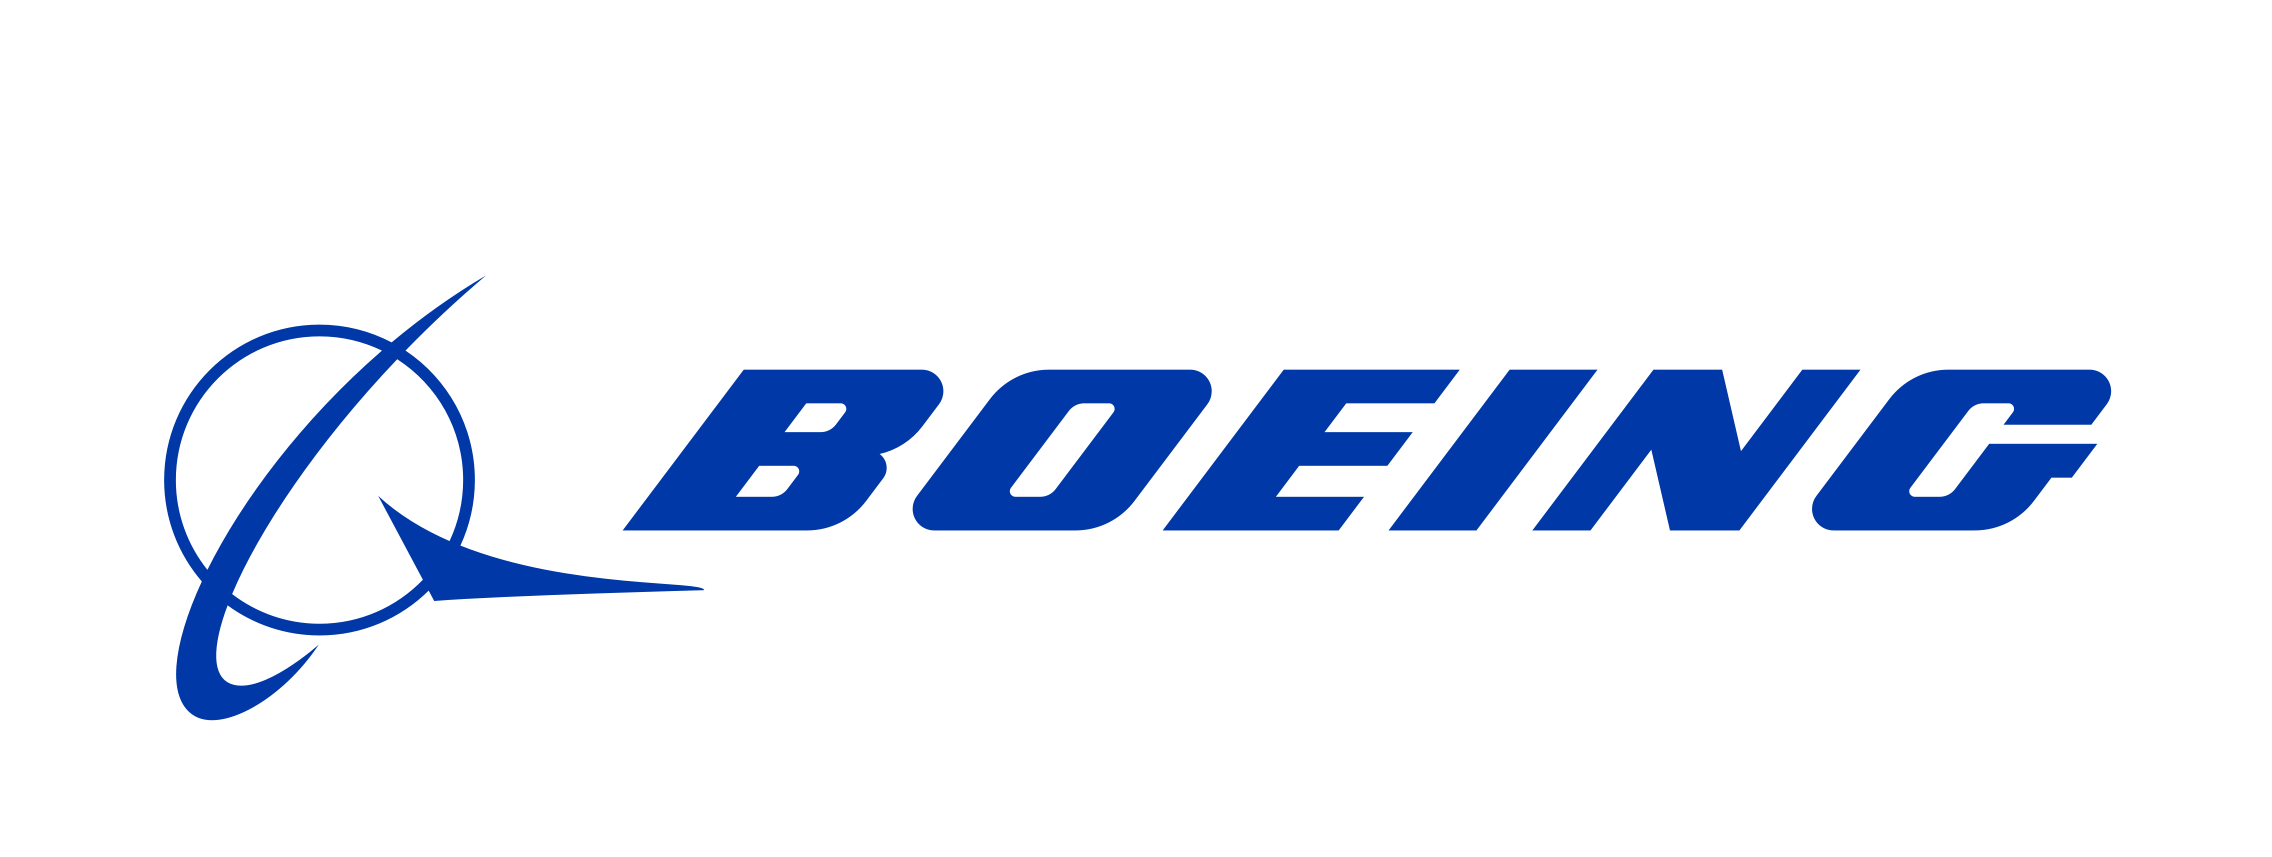 Boeing Company Logo - Boeing: Boeing Australia - Home